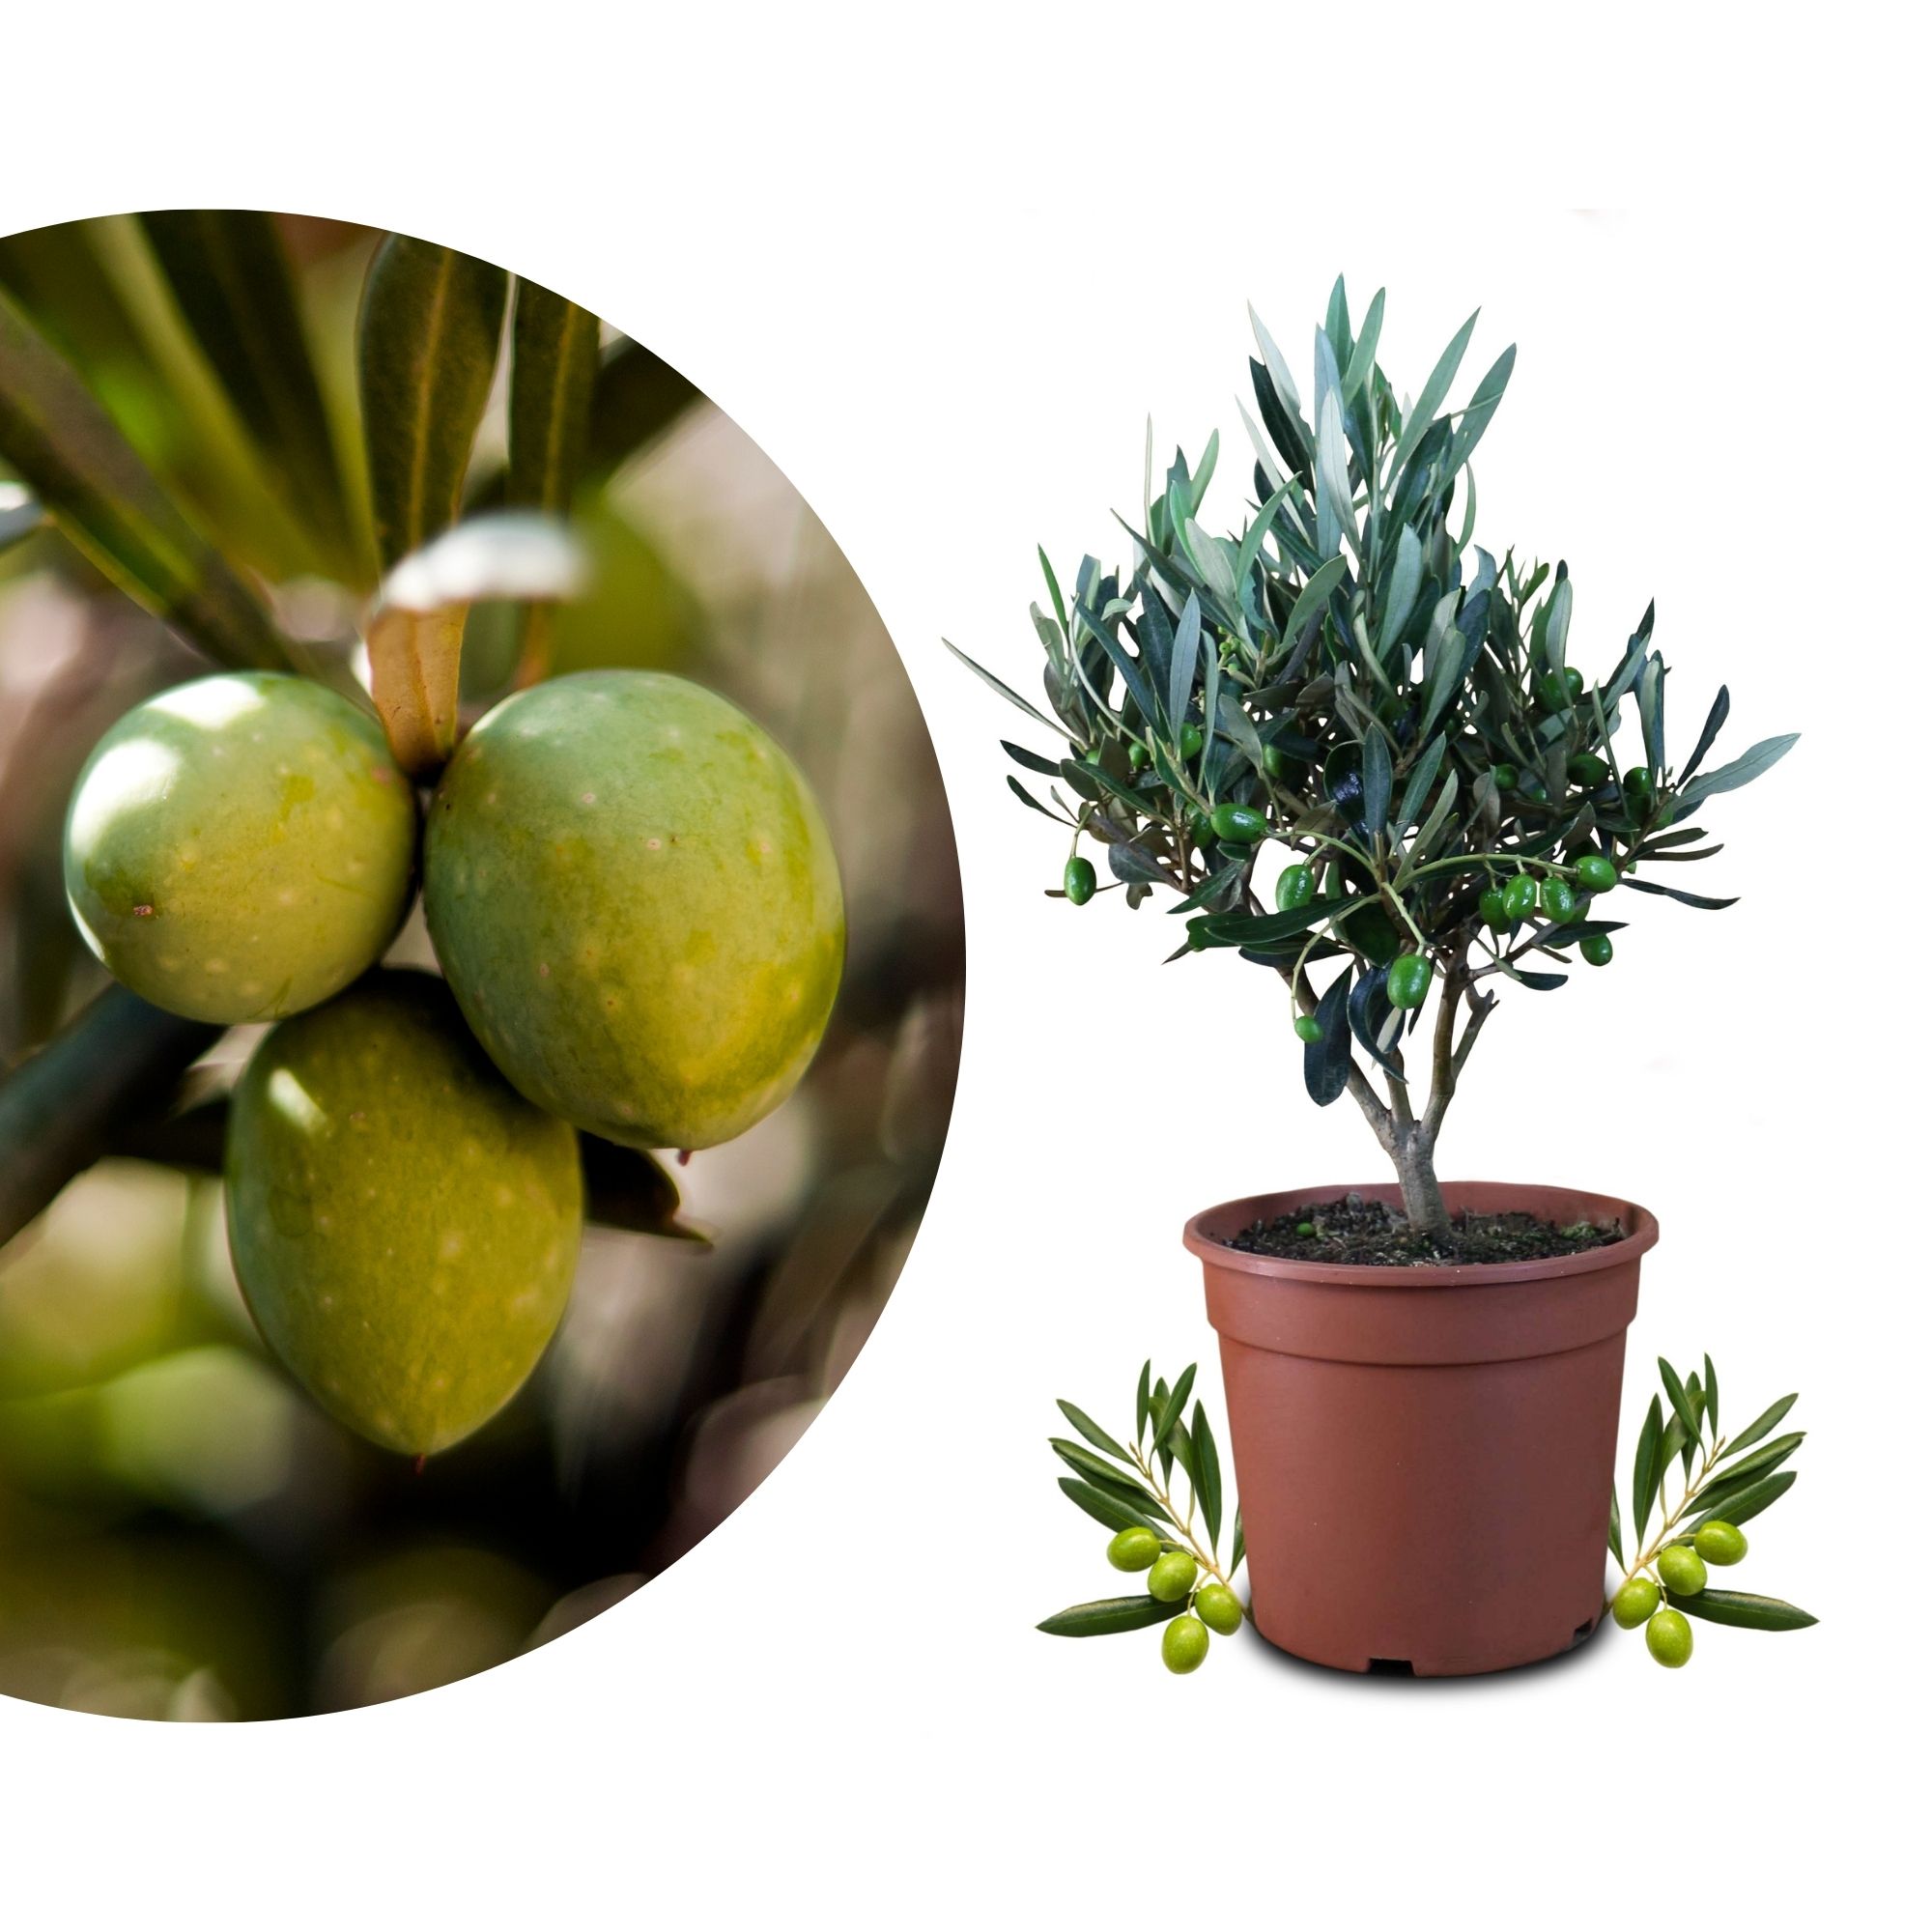 Olivenbaum [Piccolino] - Olea europaea - echte Olive